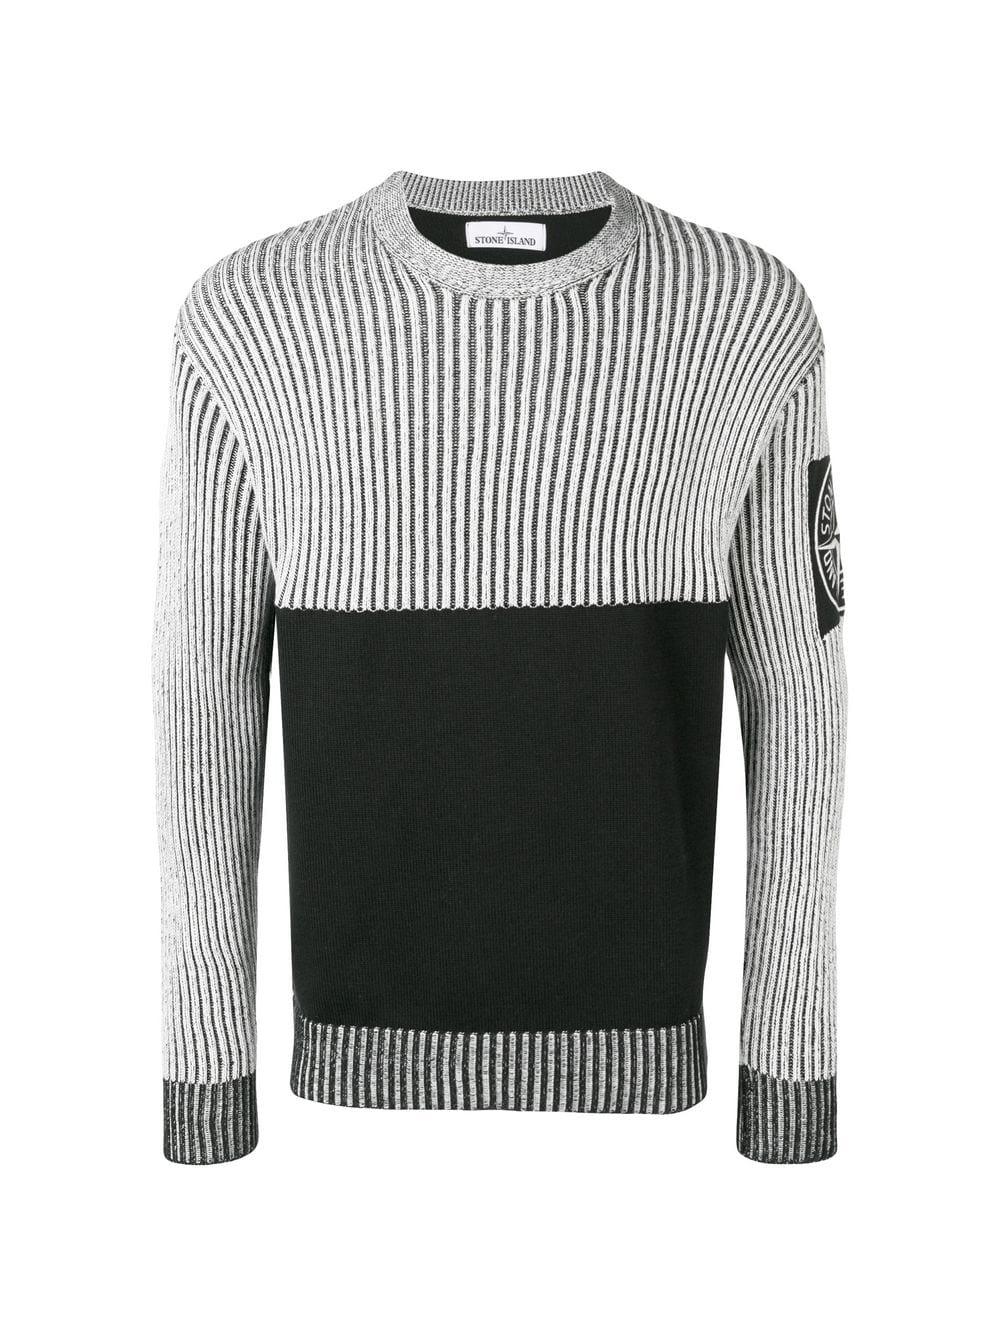 Stone Island Cotton Heavy Crew Knit Sweater in Black/White (Black) for Men  - Lyst